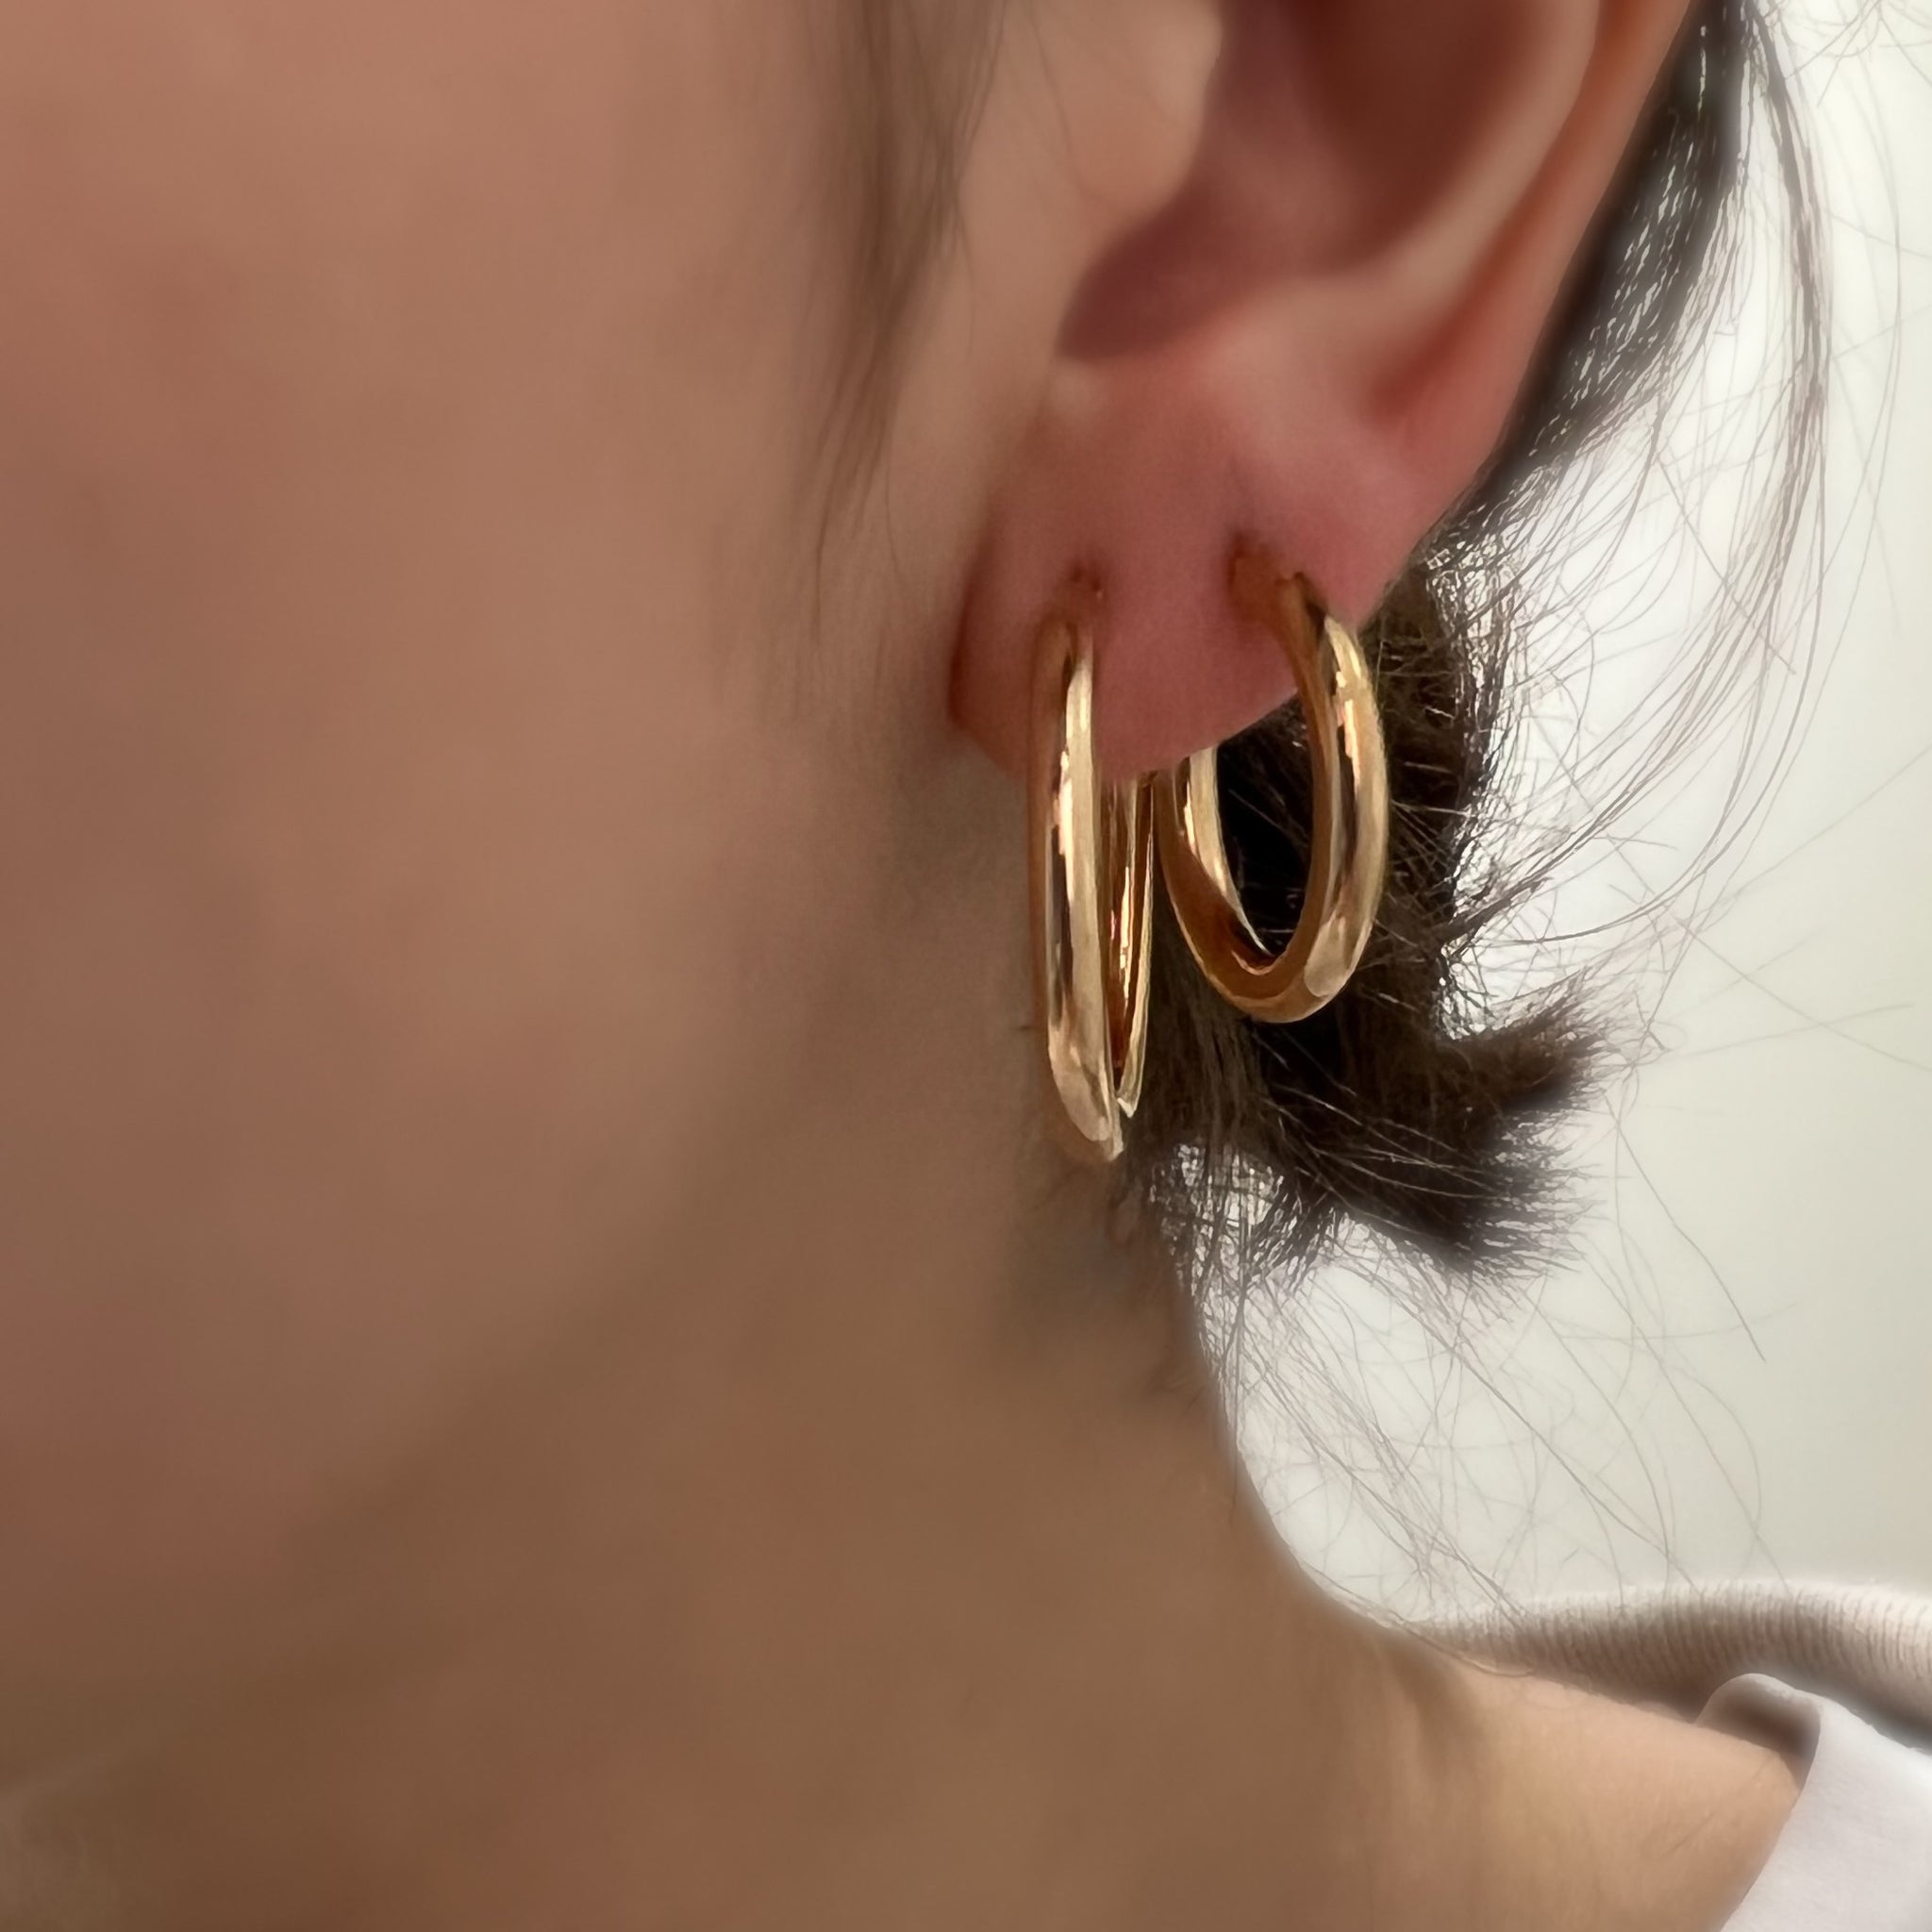 9ct Yellow Gold Chunky Small Hoop Earrings